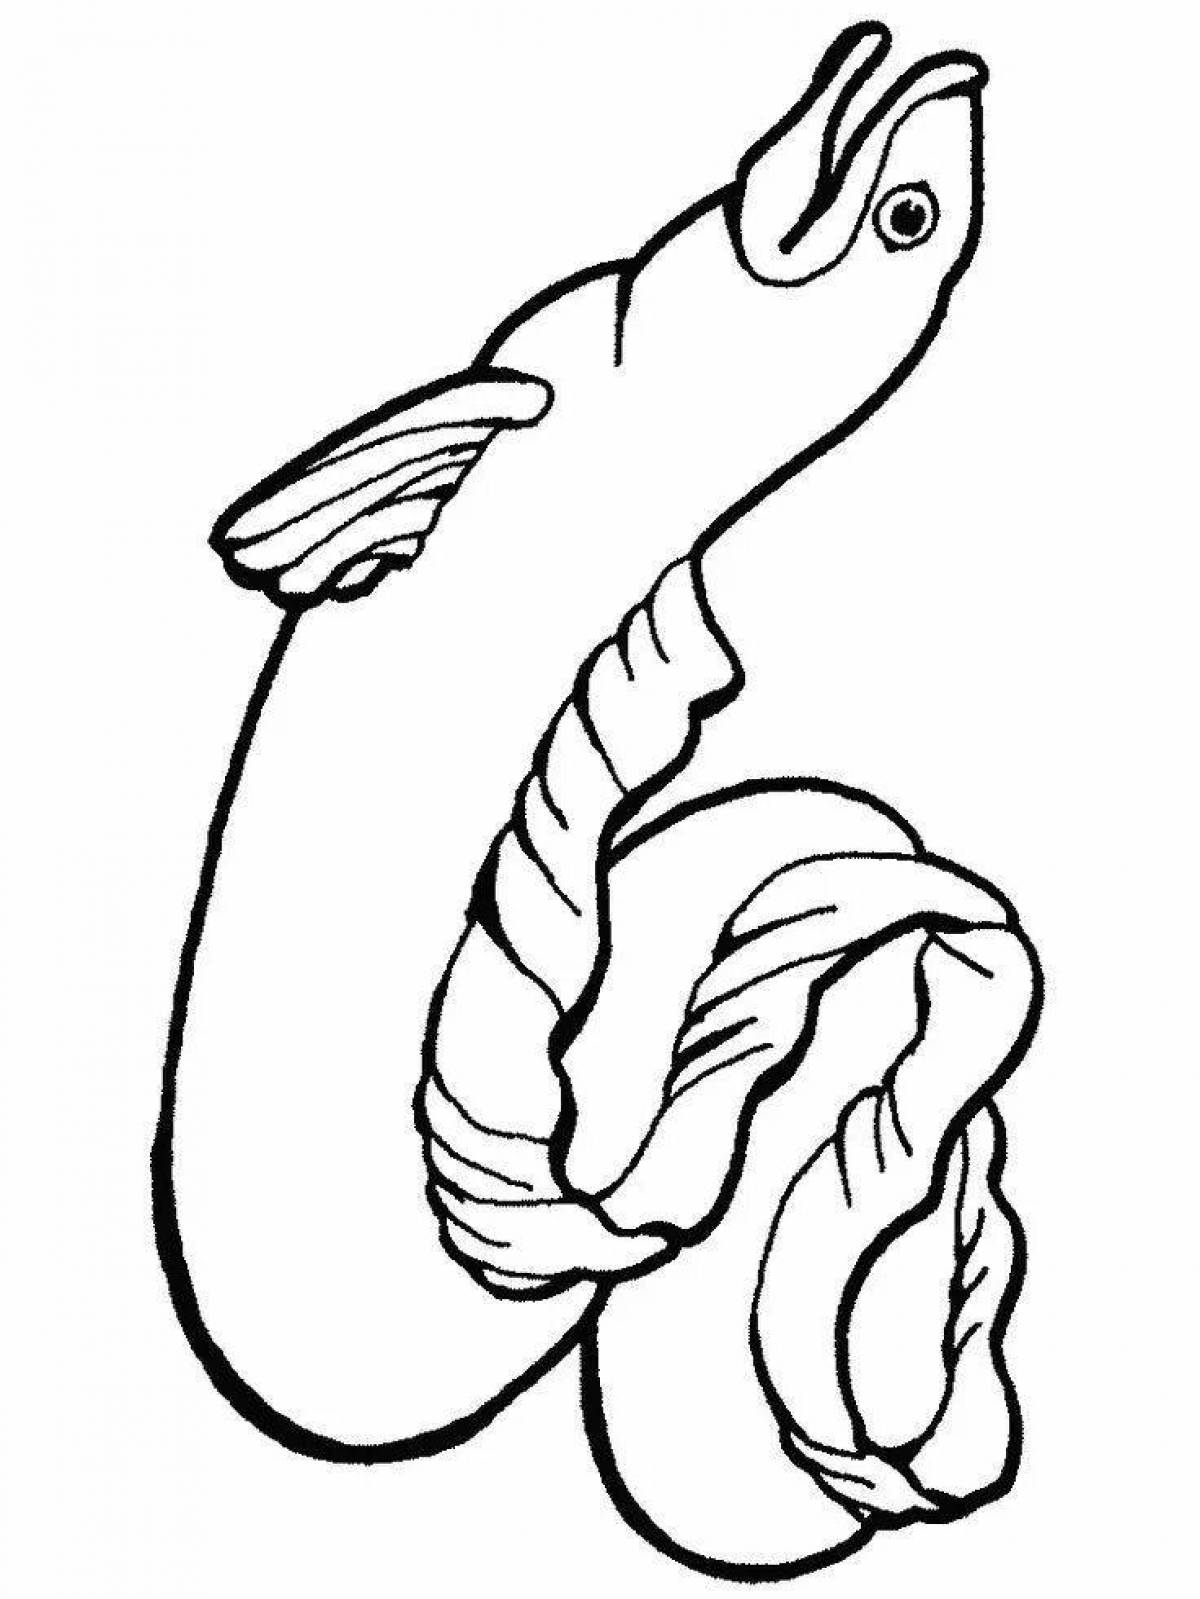 Amazing moray eel coloring page